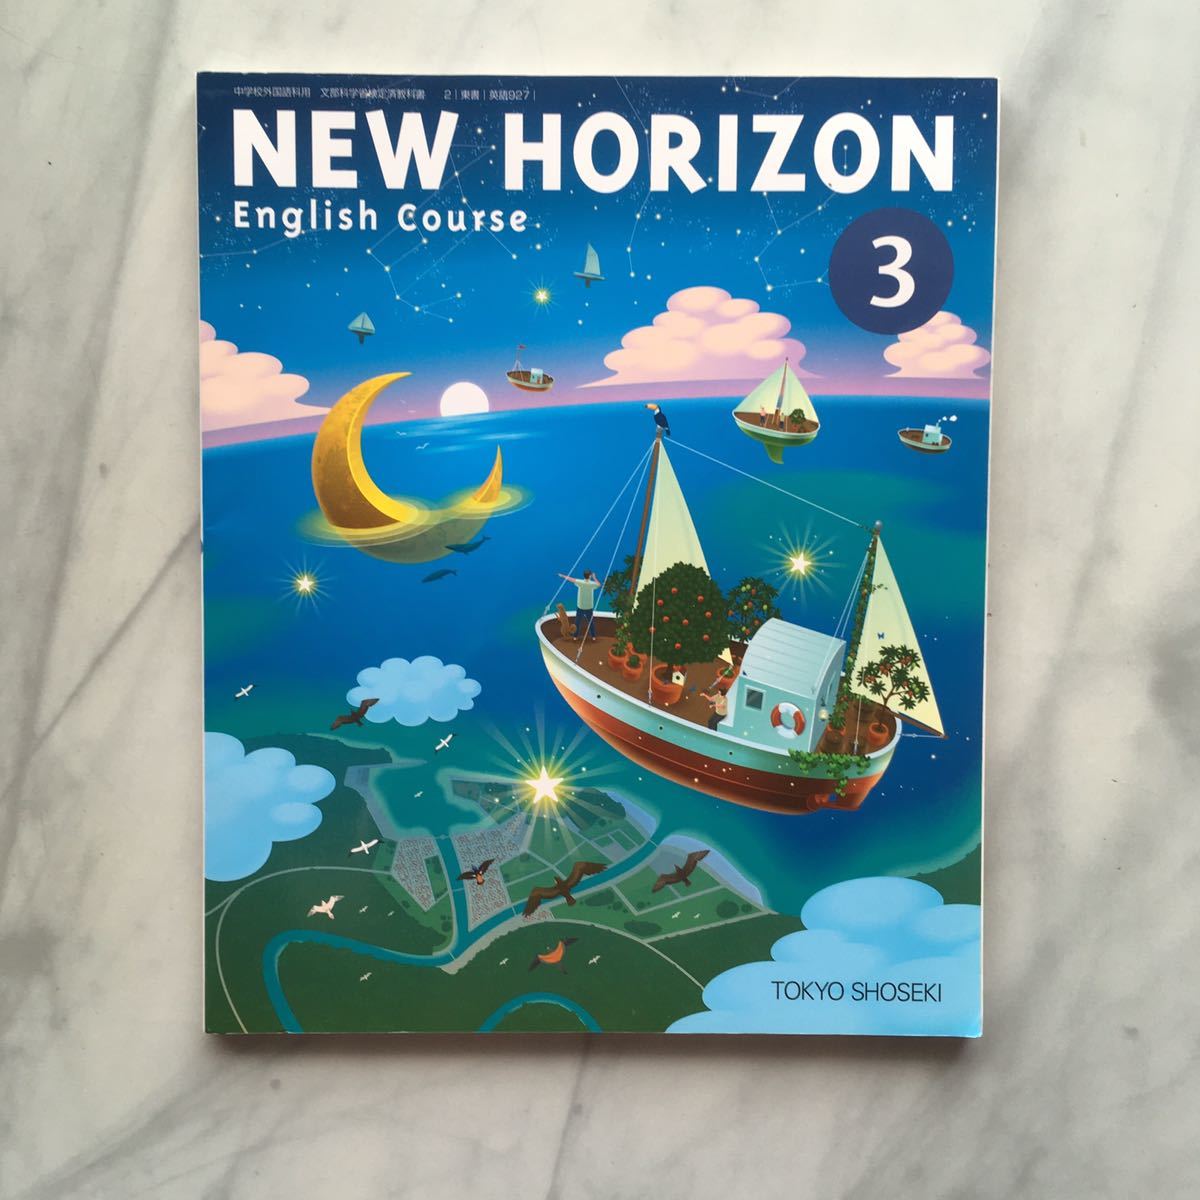 New Horizon English Course